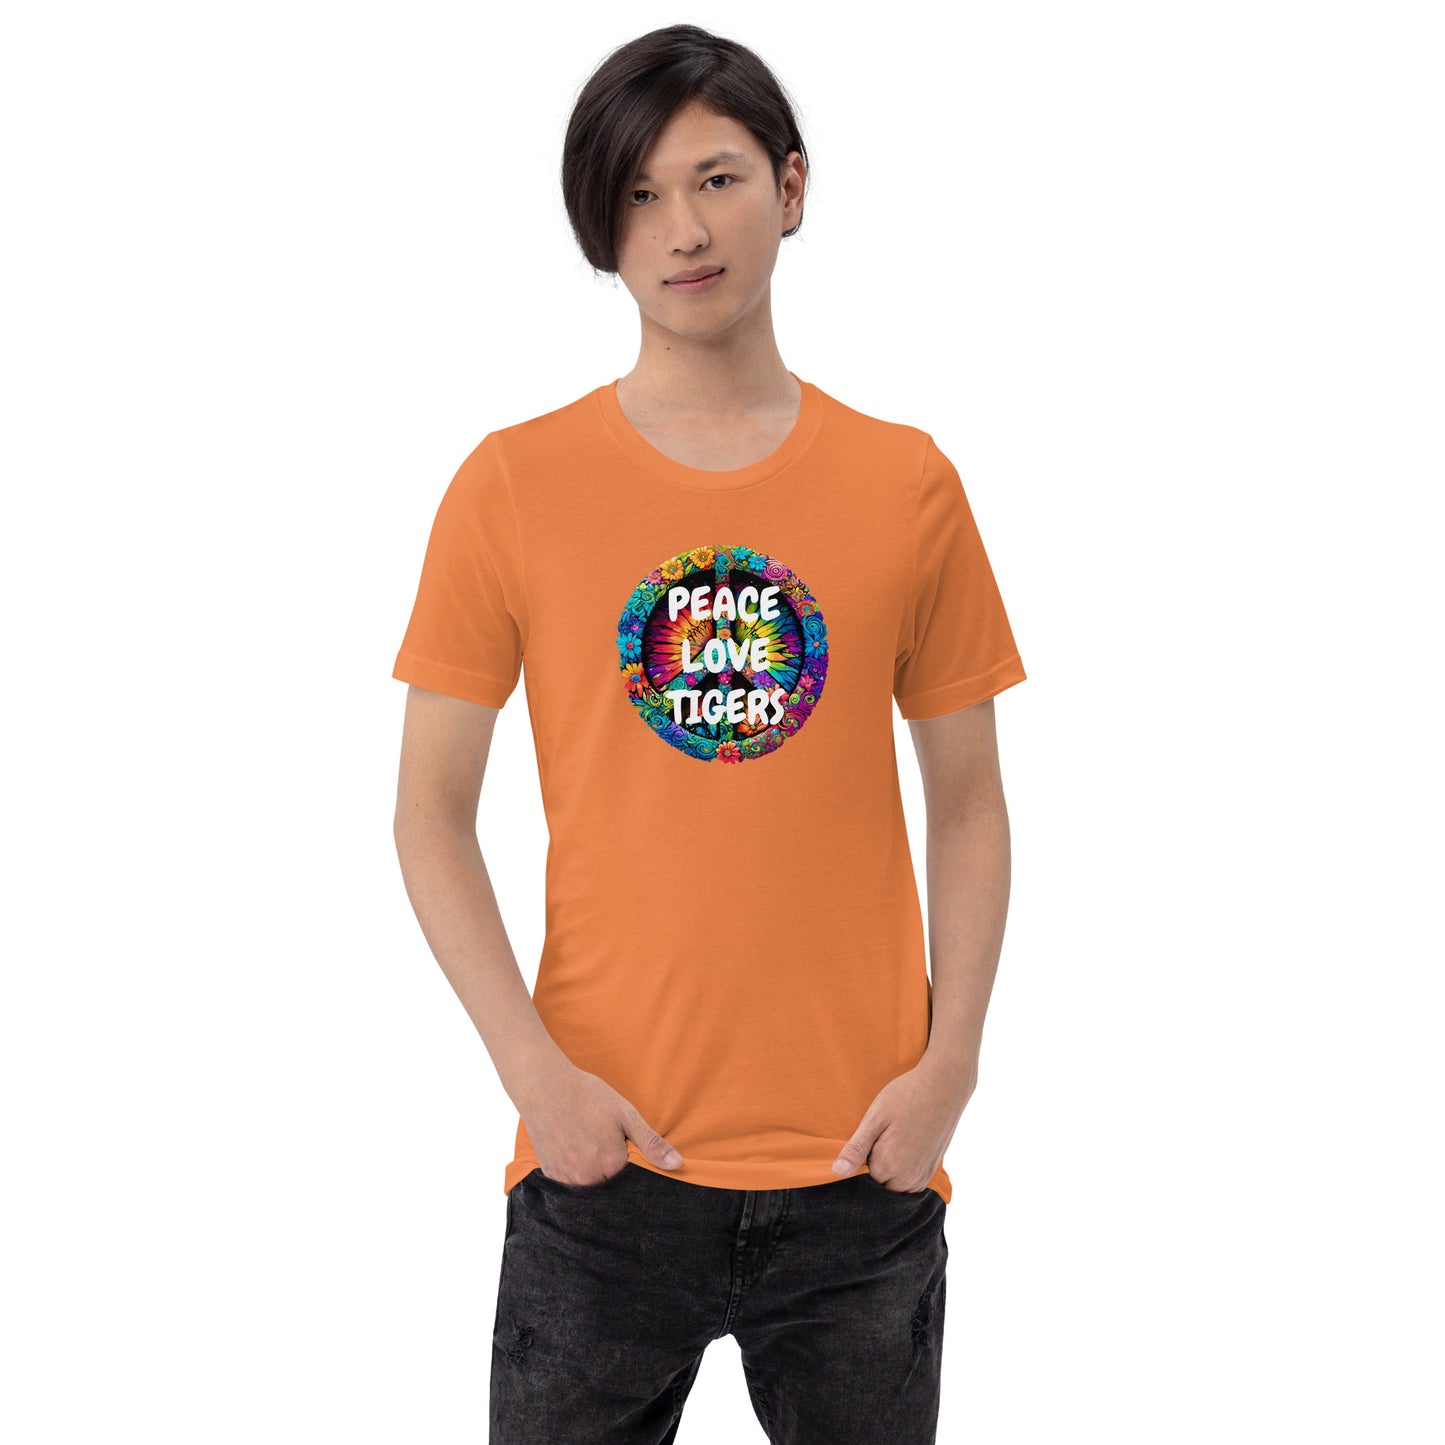 TIGERS Unisex t-shirt